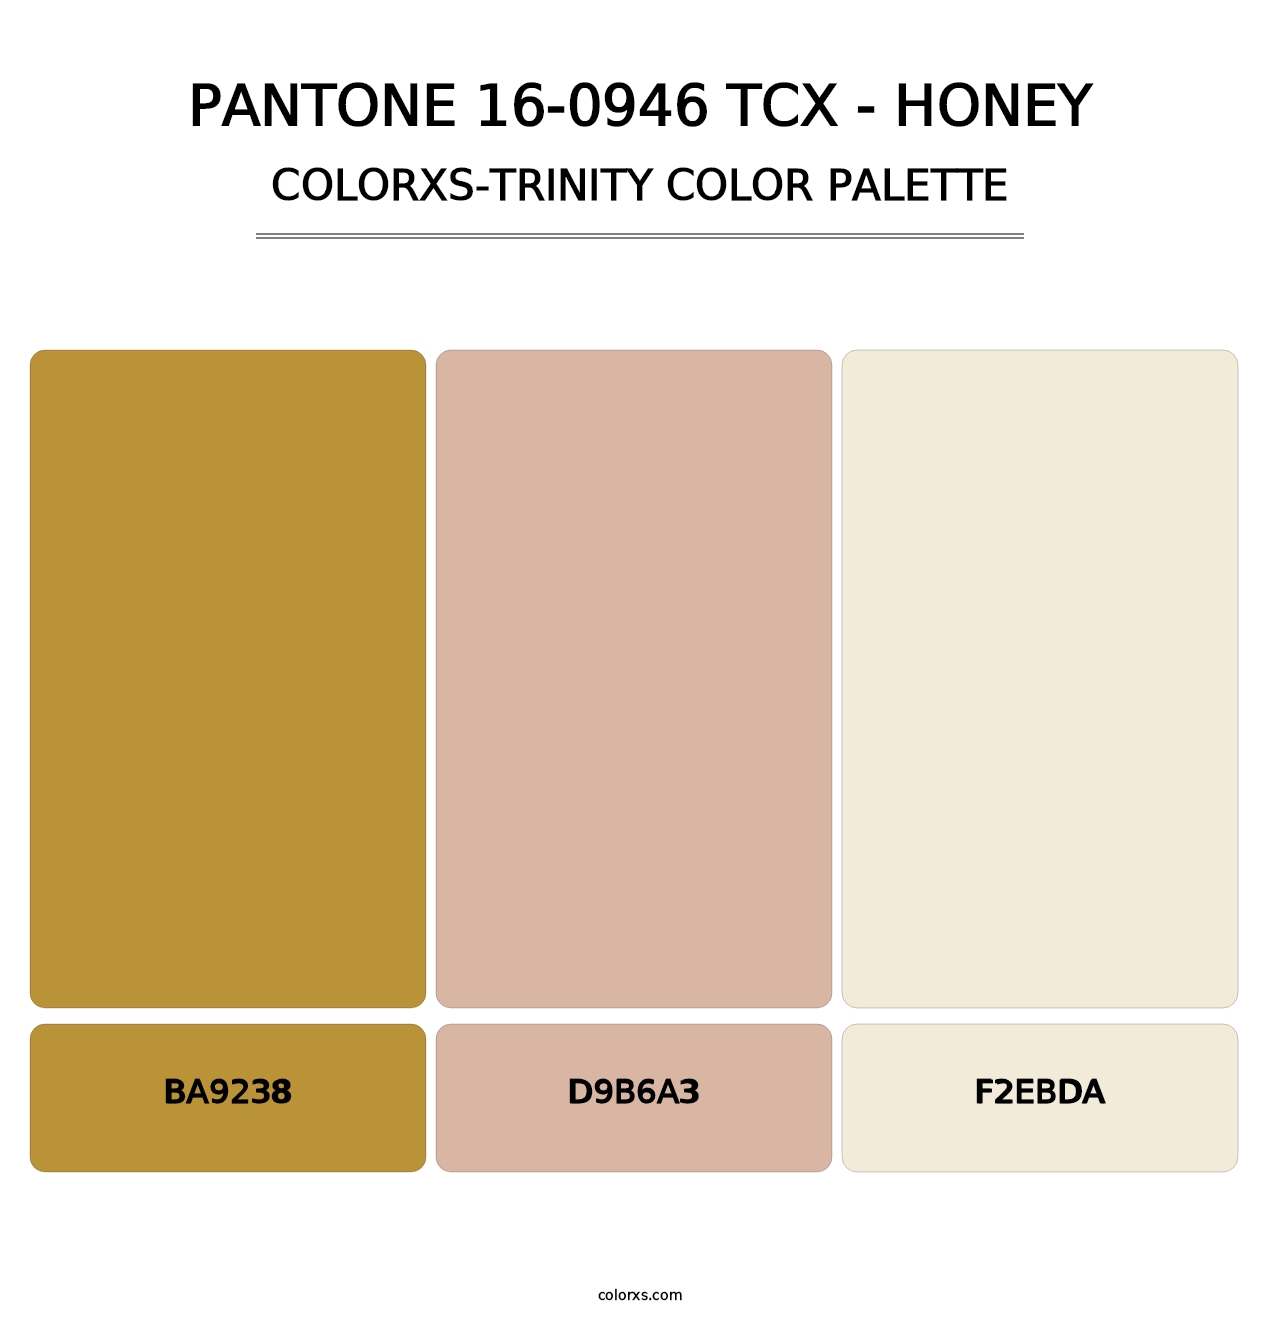 PANTONE 16-0946 TCX - Honey - Colorxs Trinity Palette